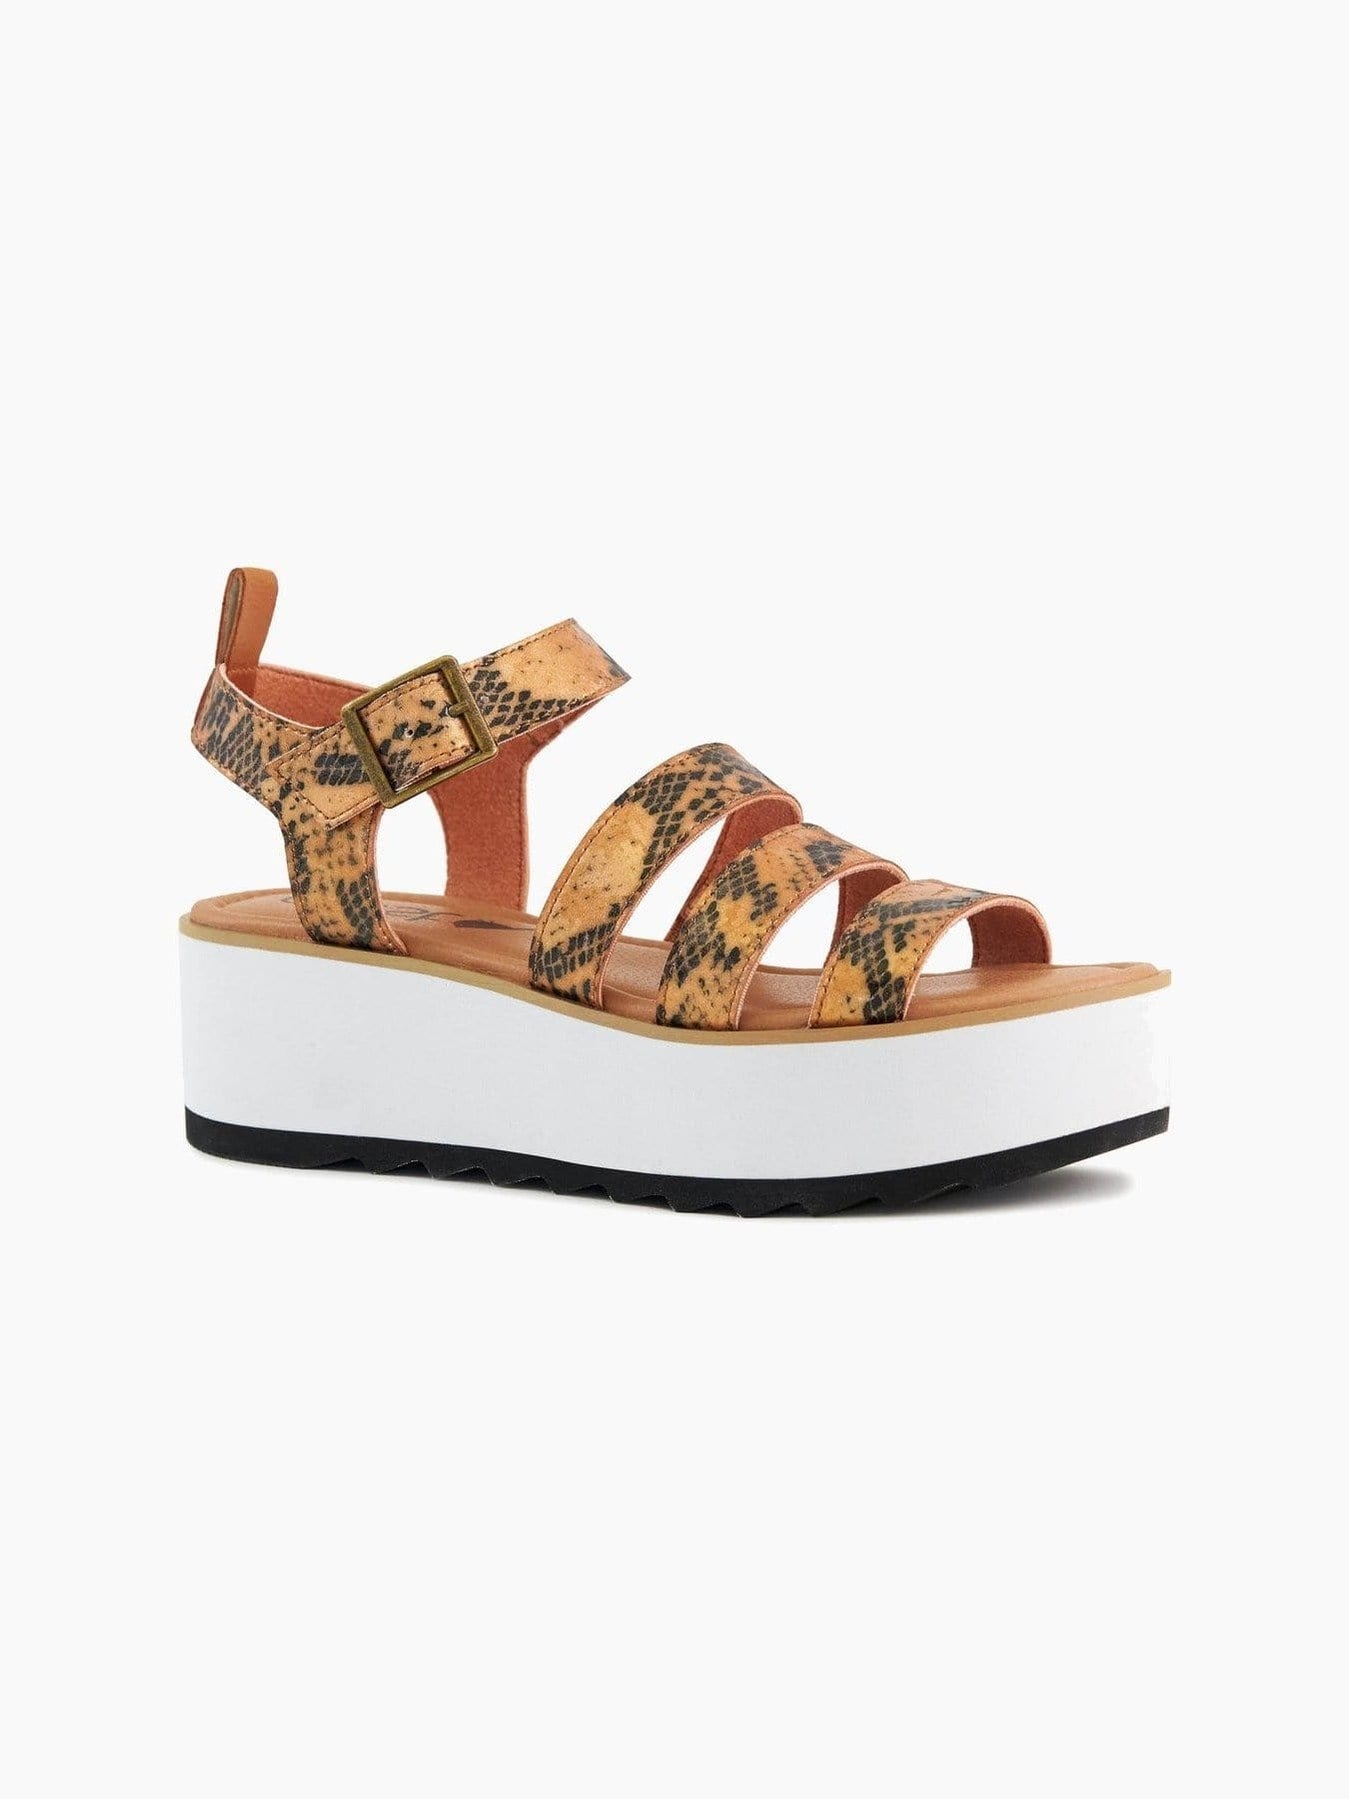 KAUAI Platform Sandal in Snake-Tan — CoEdition